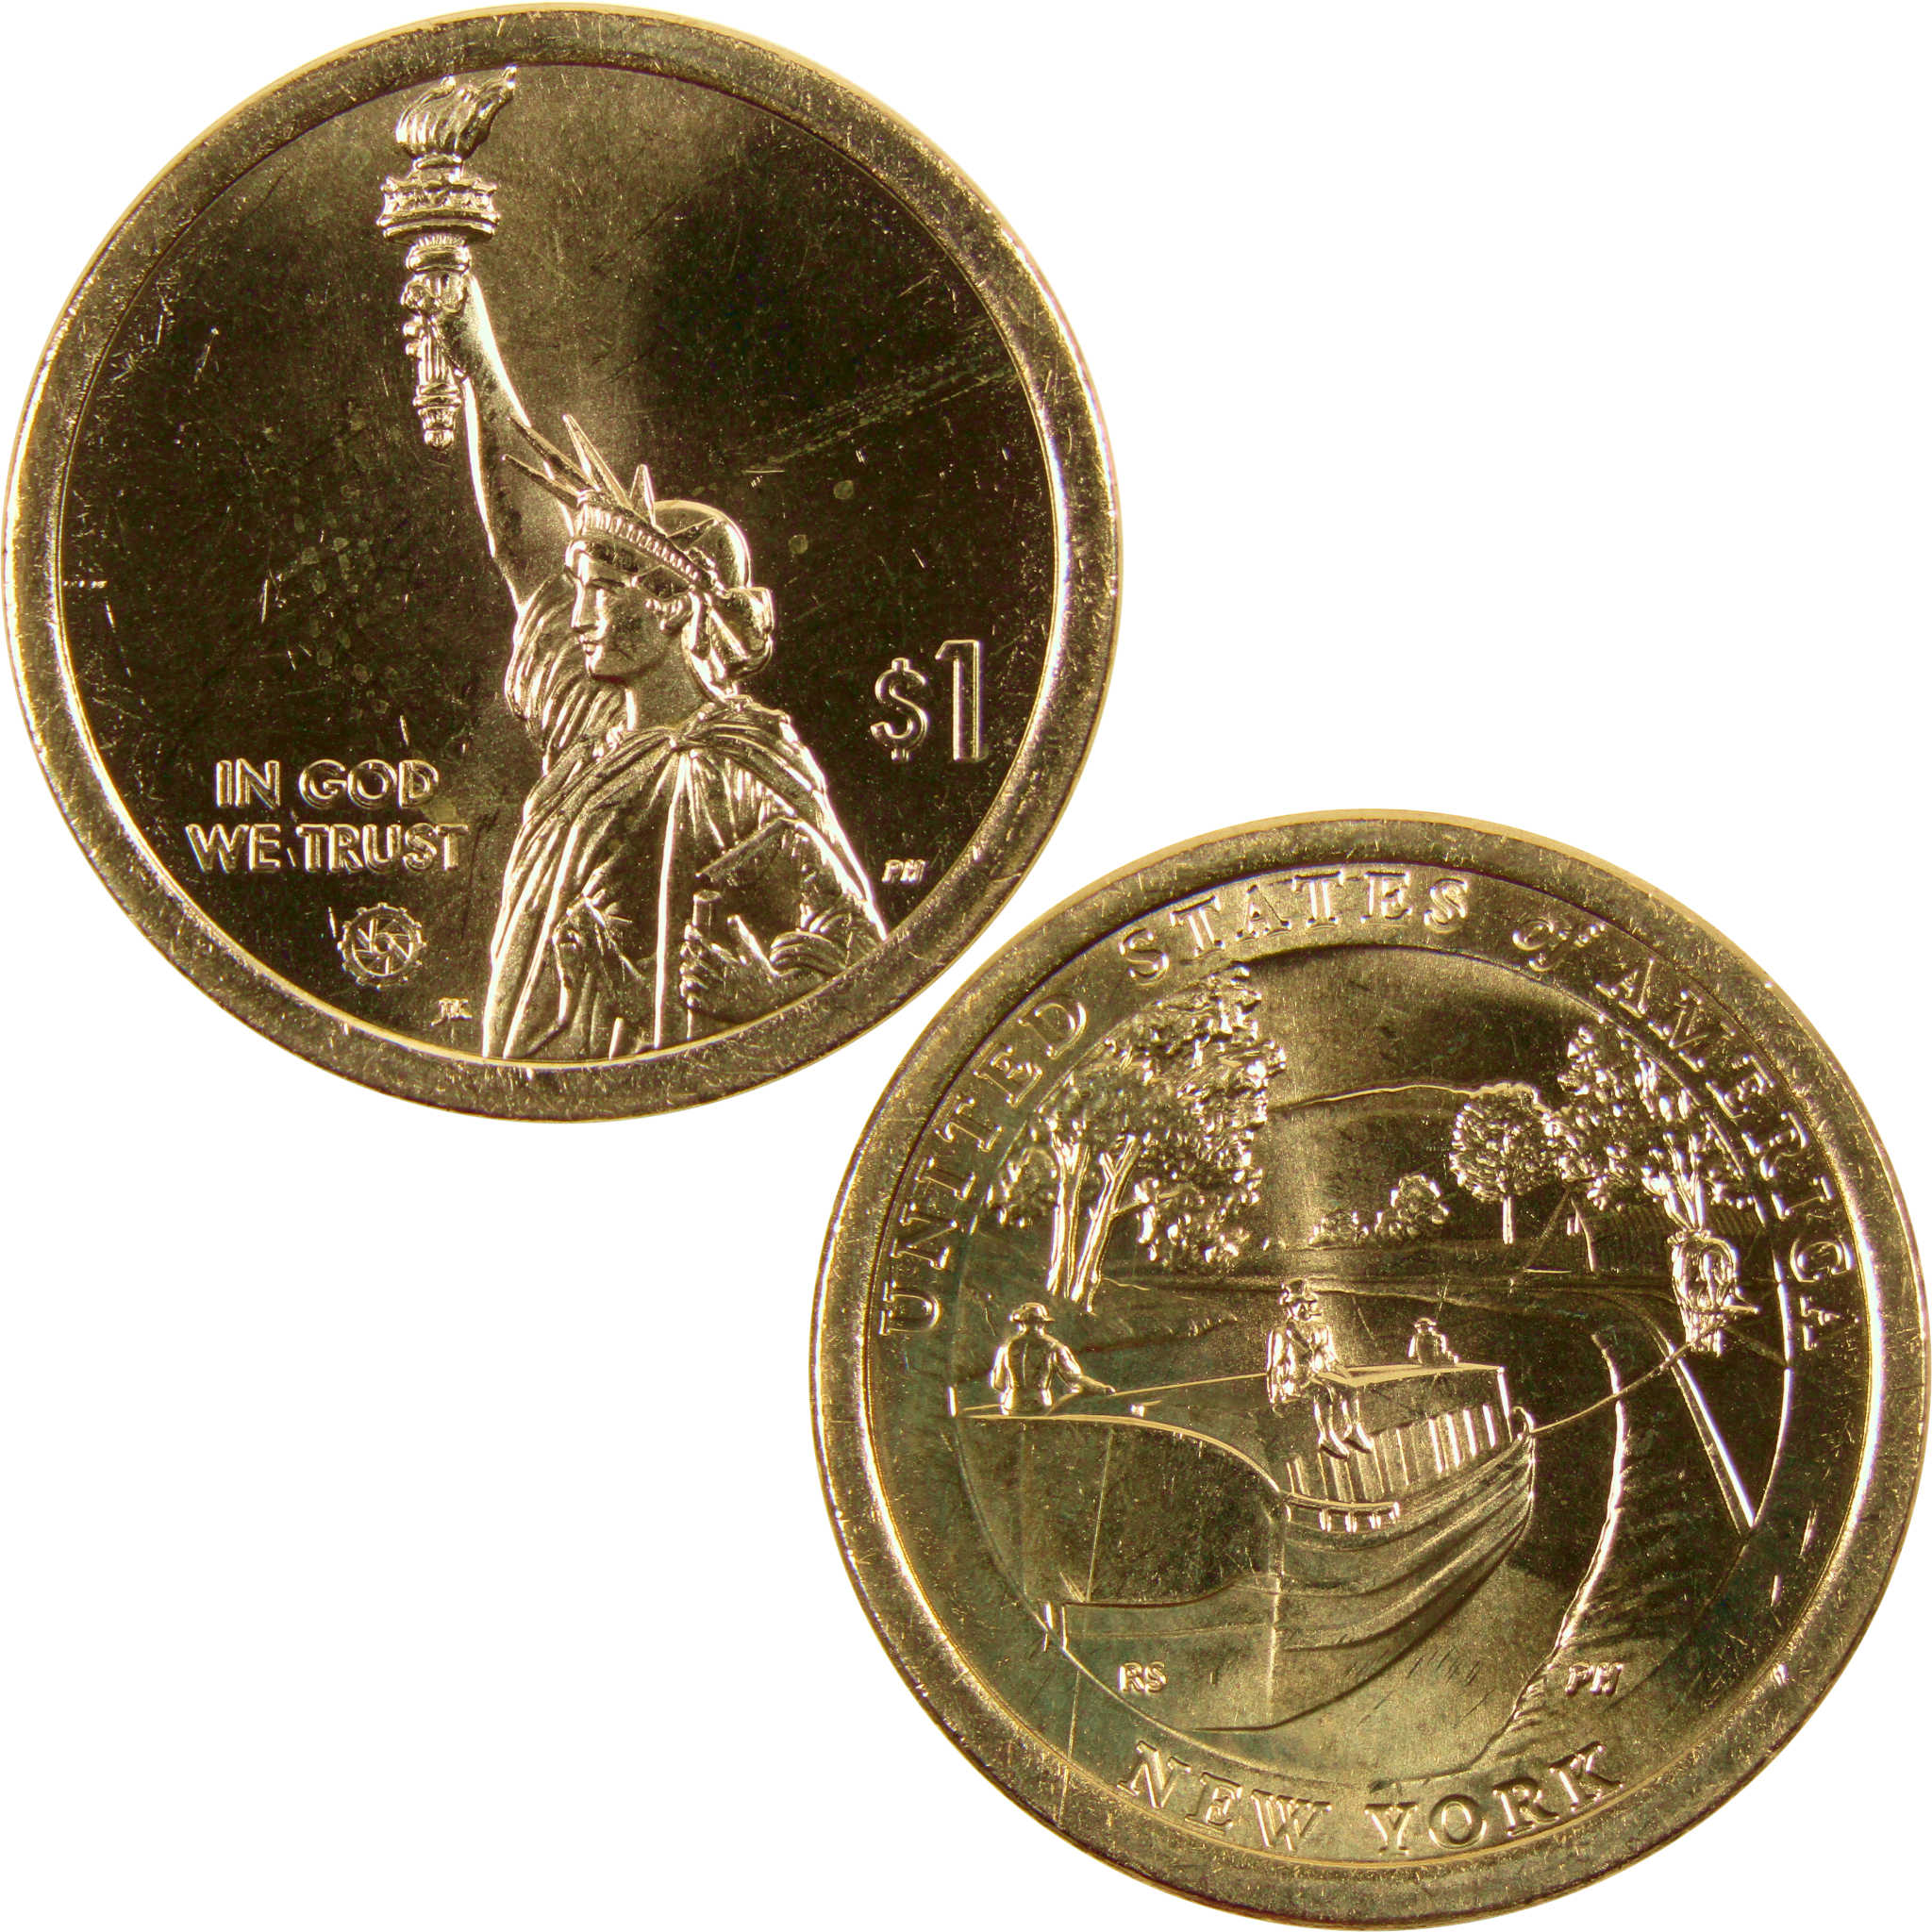 2021 D Erie Canal American Innovation Dollar BU Uncirculated $1 Coin